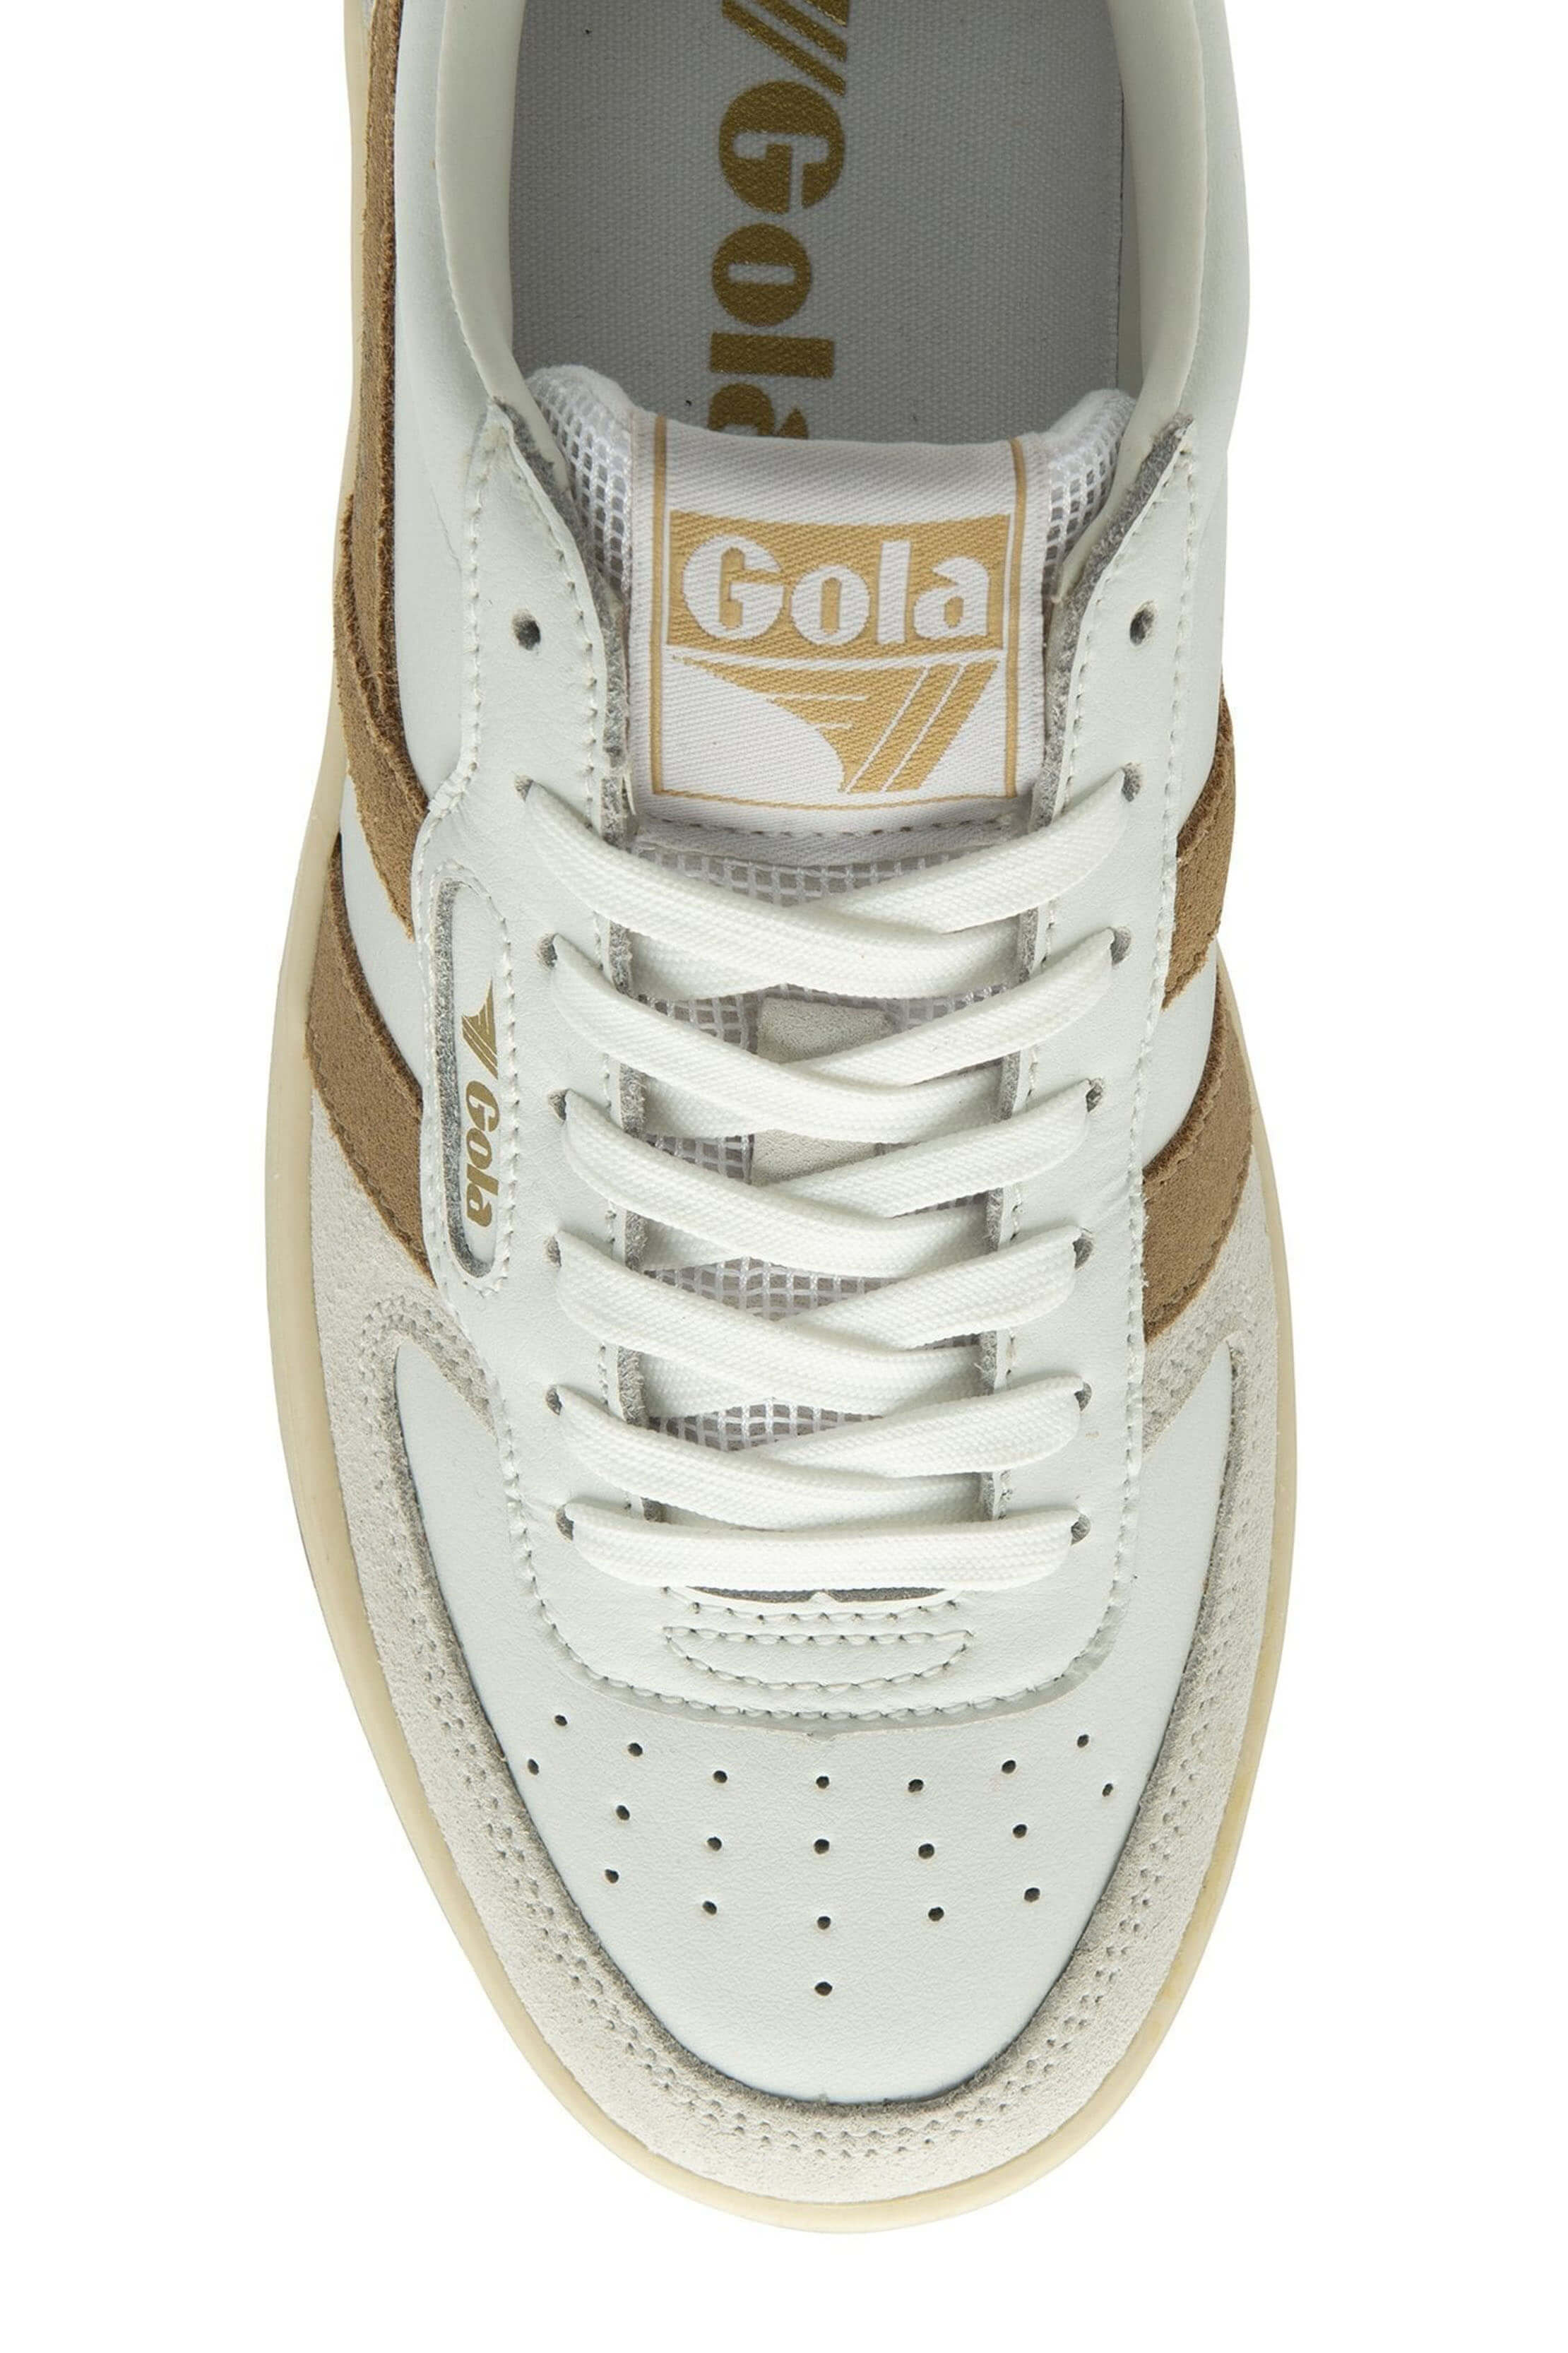 Gola hawk shoe in light caramel gold